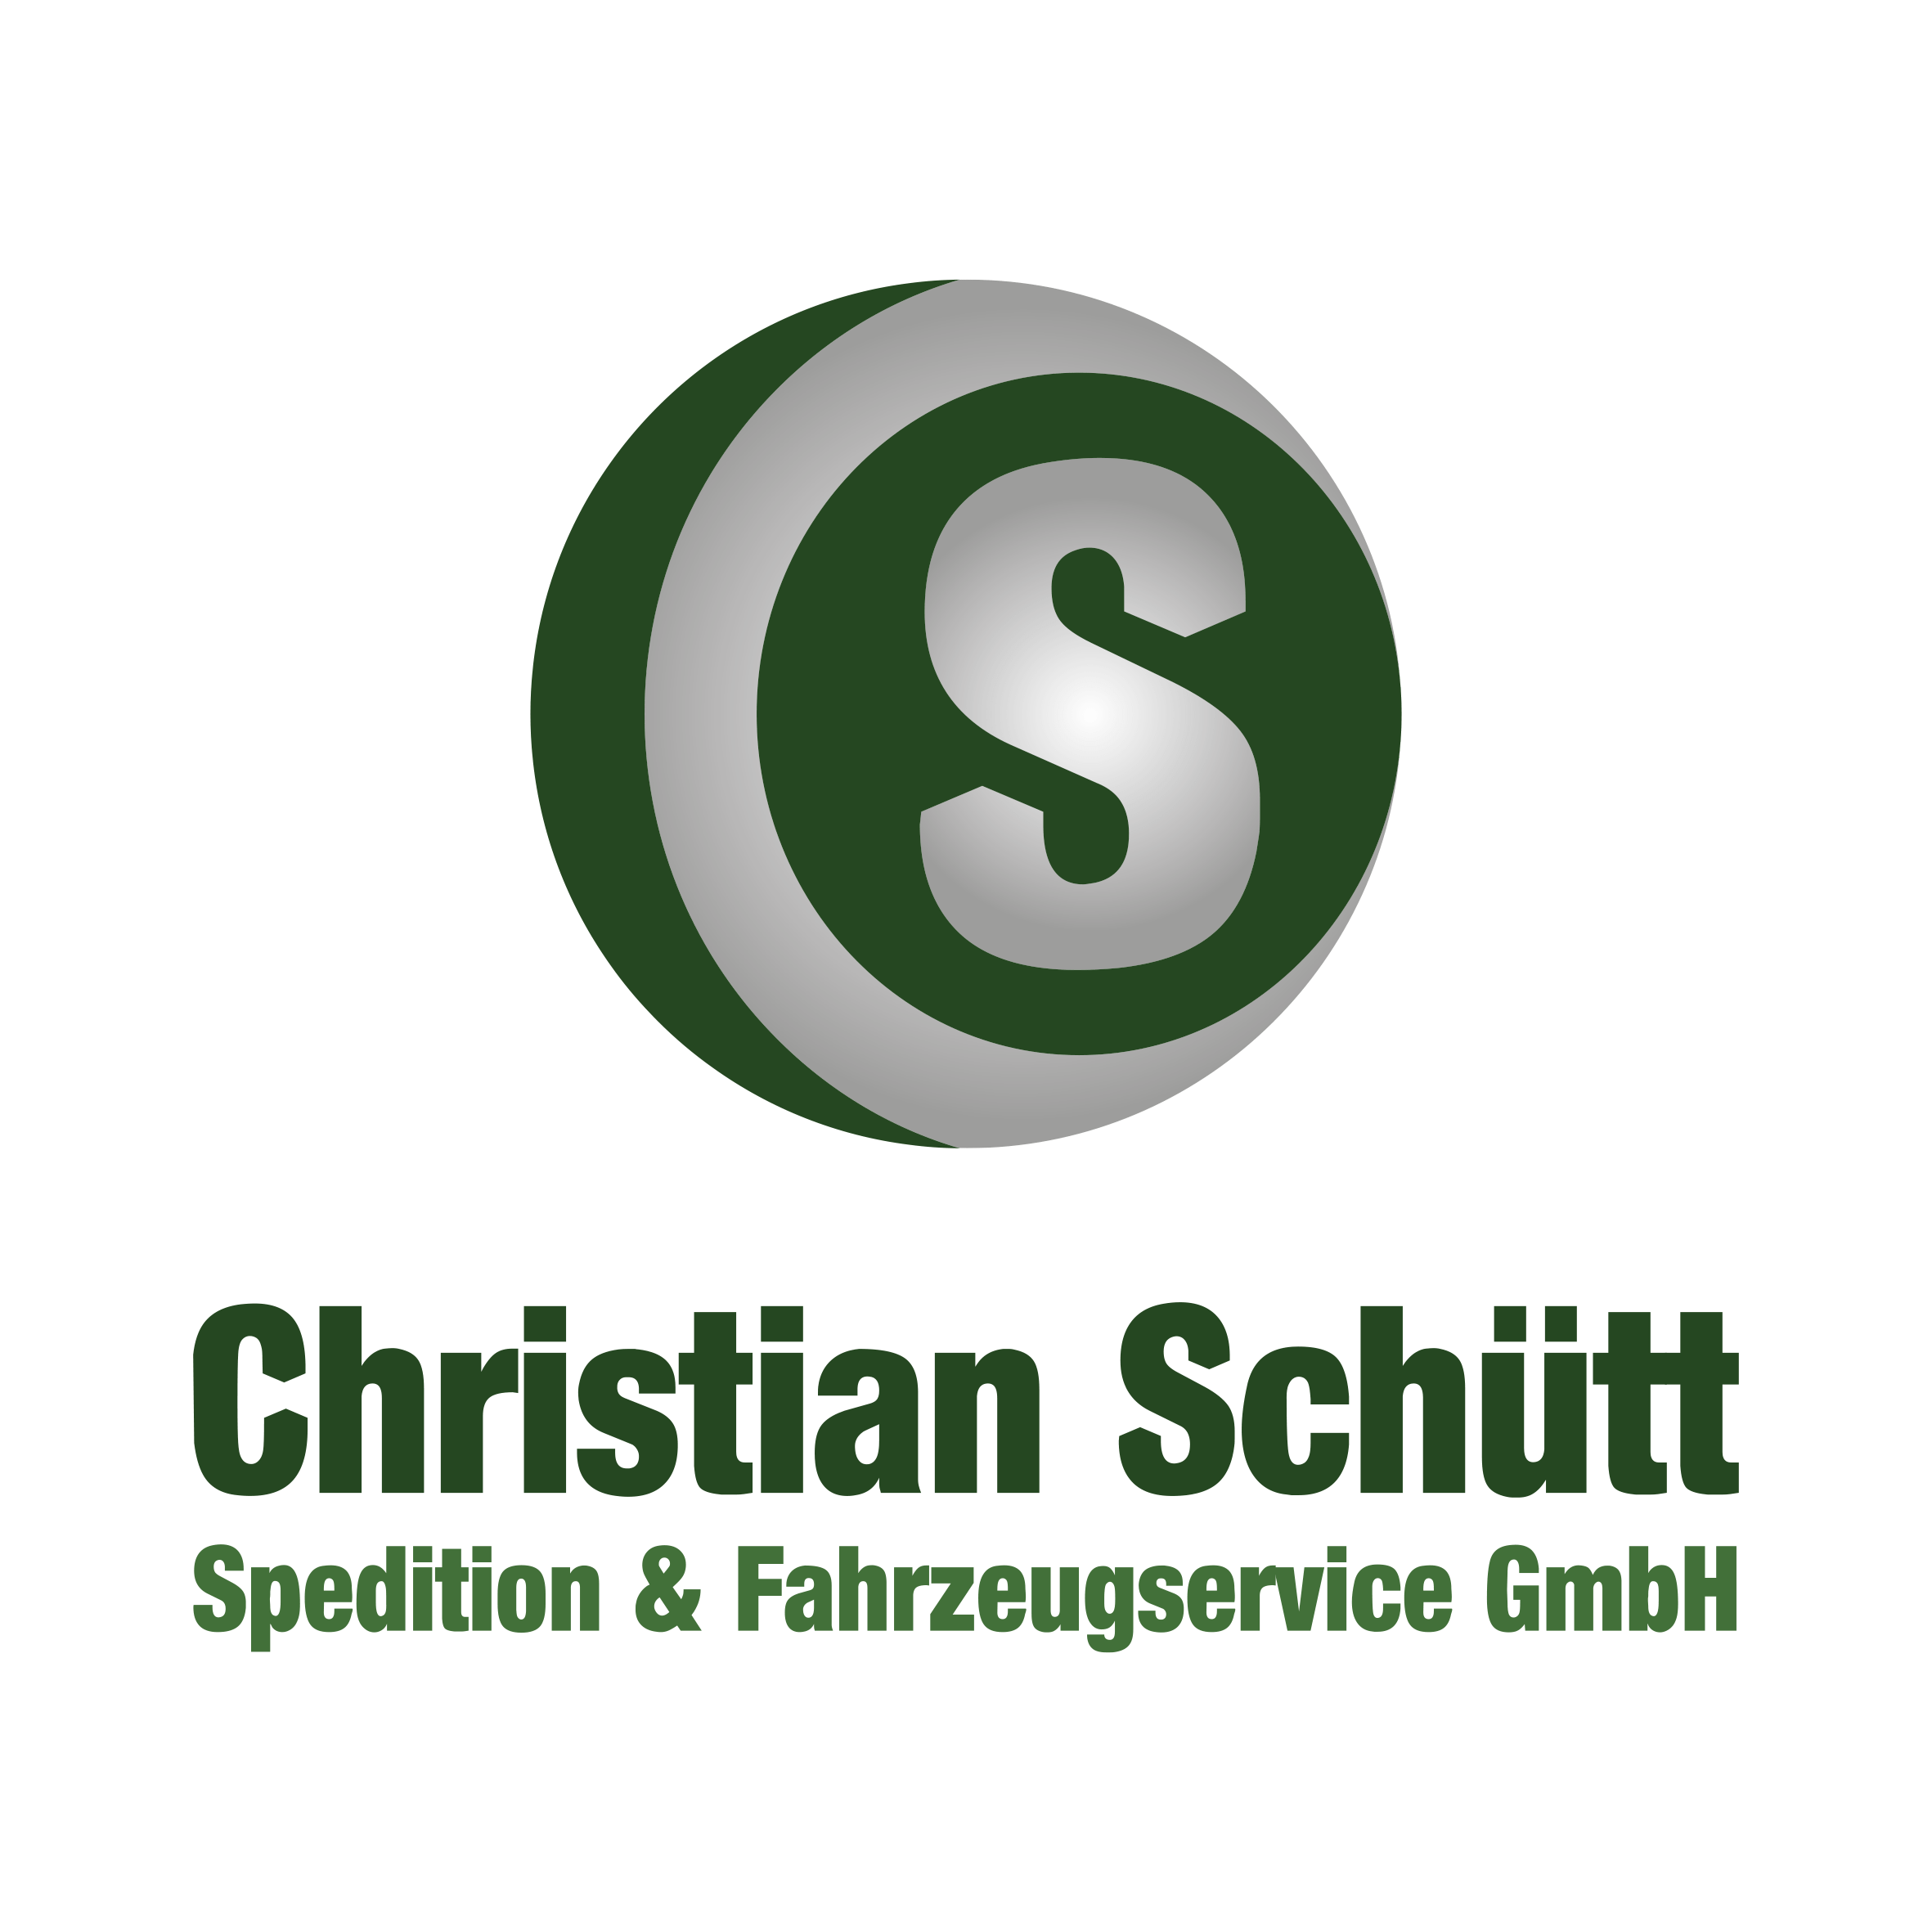 Christian Schütt Spedition & Fahrzeugservice GmbH